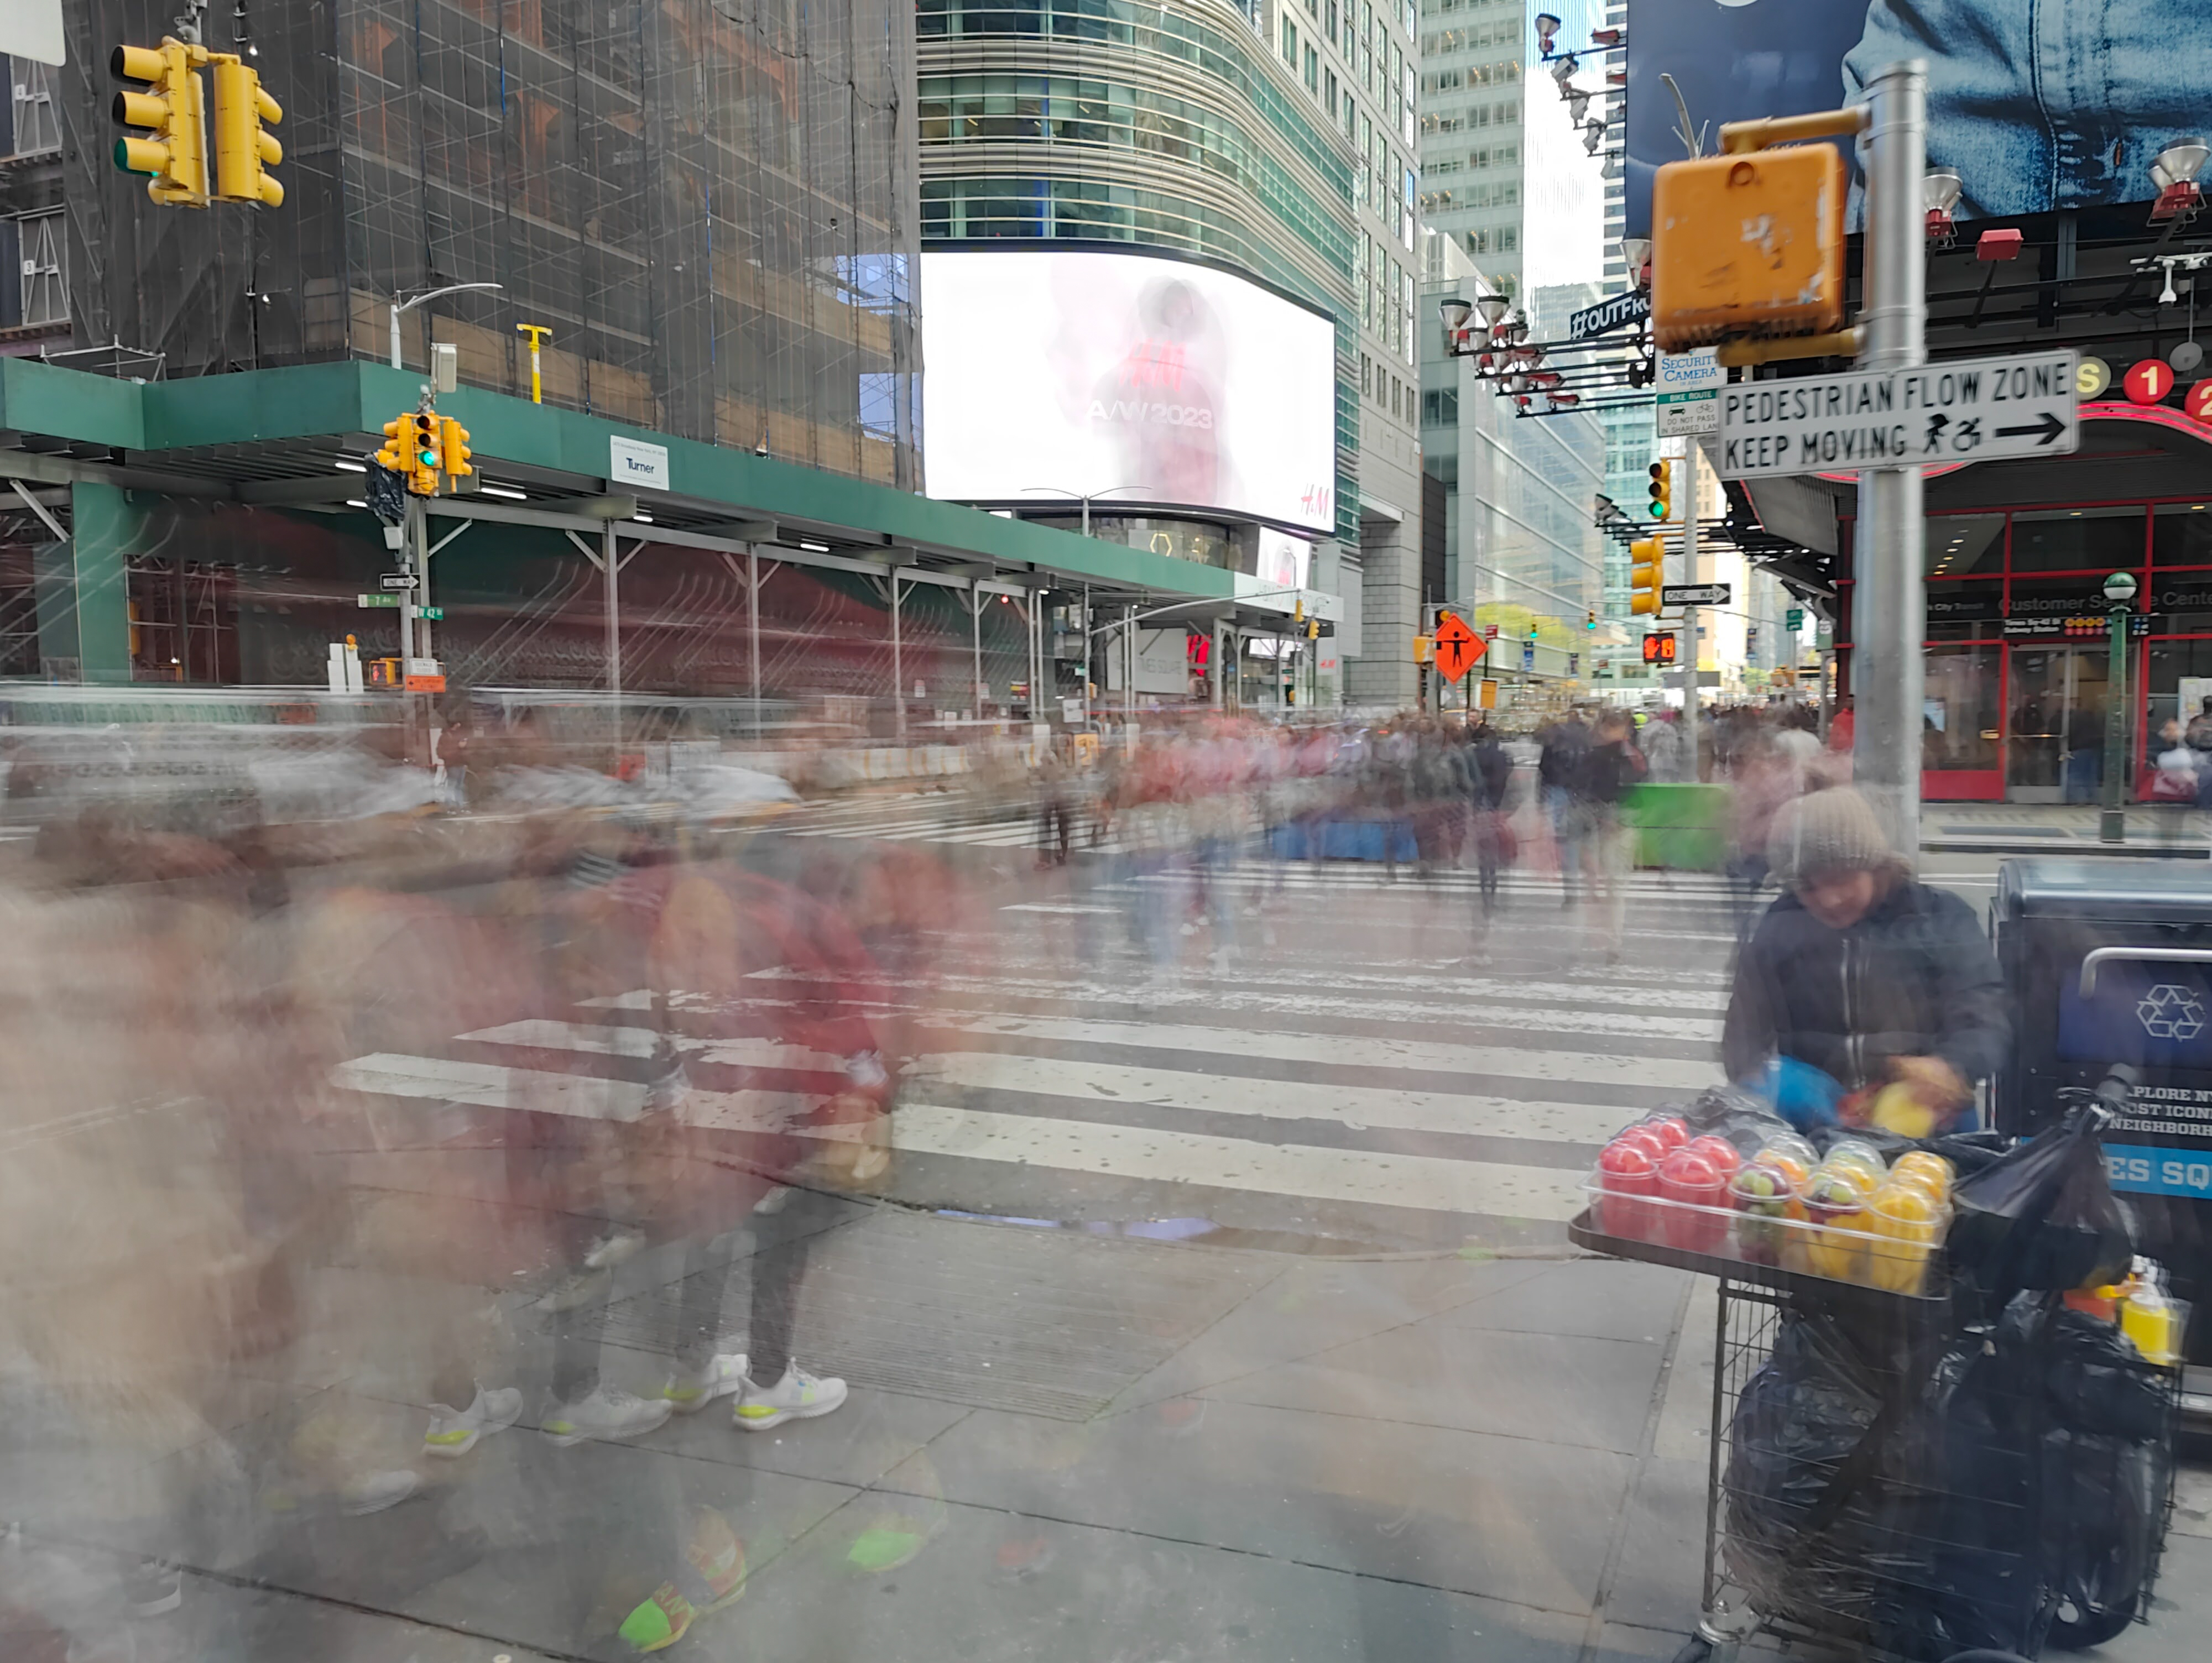 OnePlus Open camera image samples taken in New York CIty